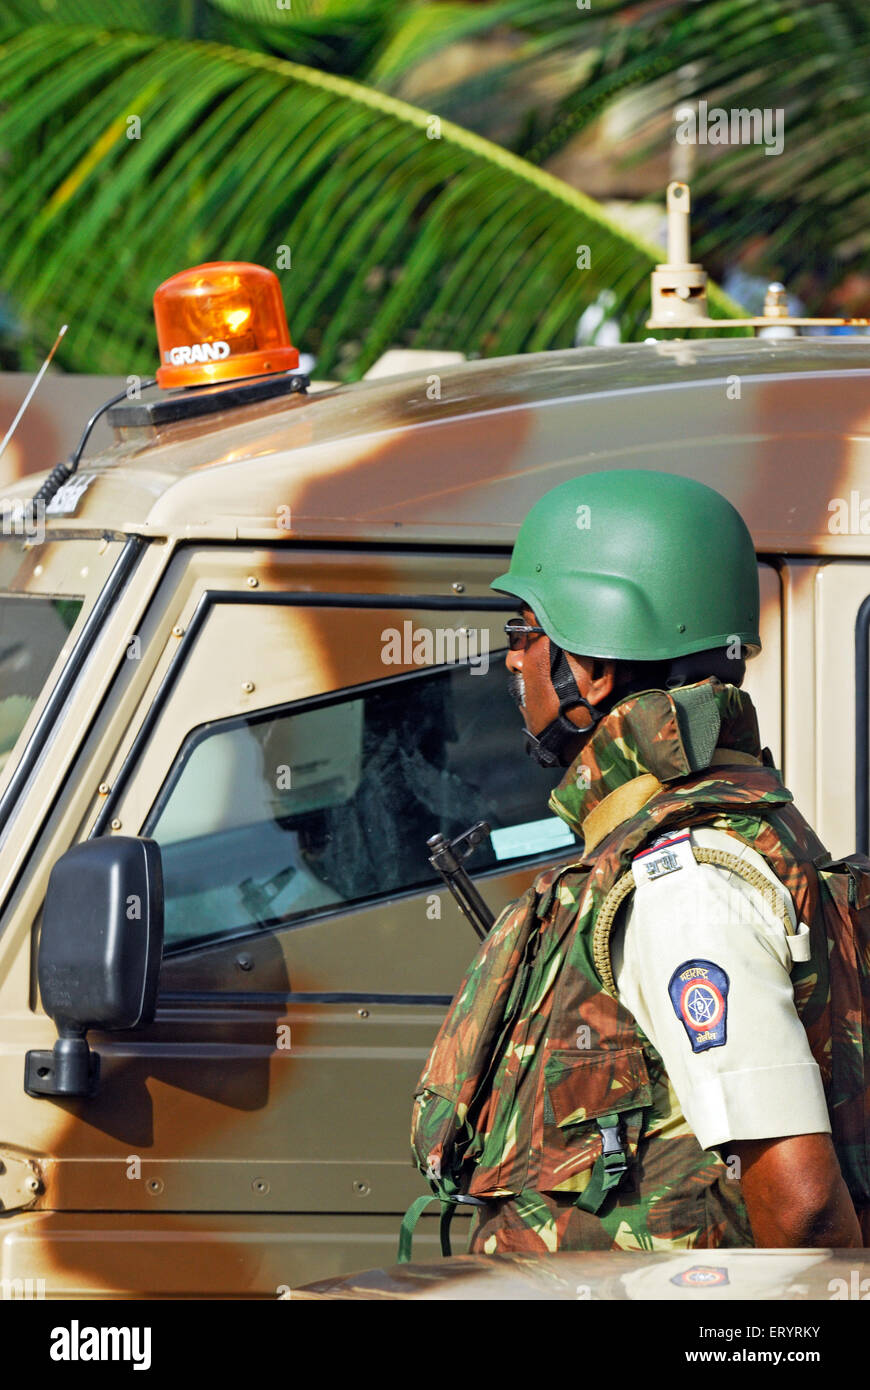 ATS , Squad anti-terrorisme , police avec véhicule de patrouille ; Bombay , Mumbai ; Maharashtra ; Inde , asie Banque D'Images